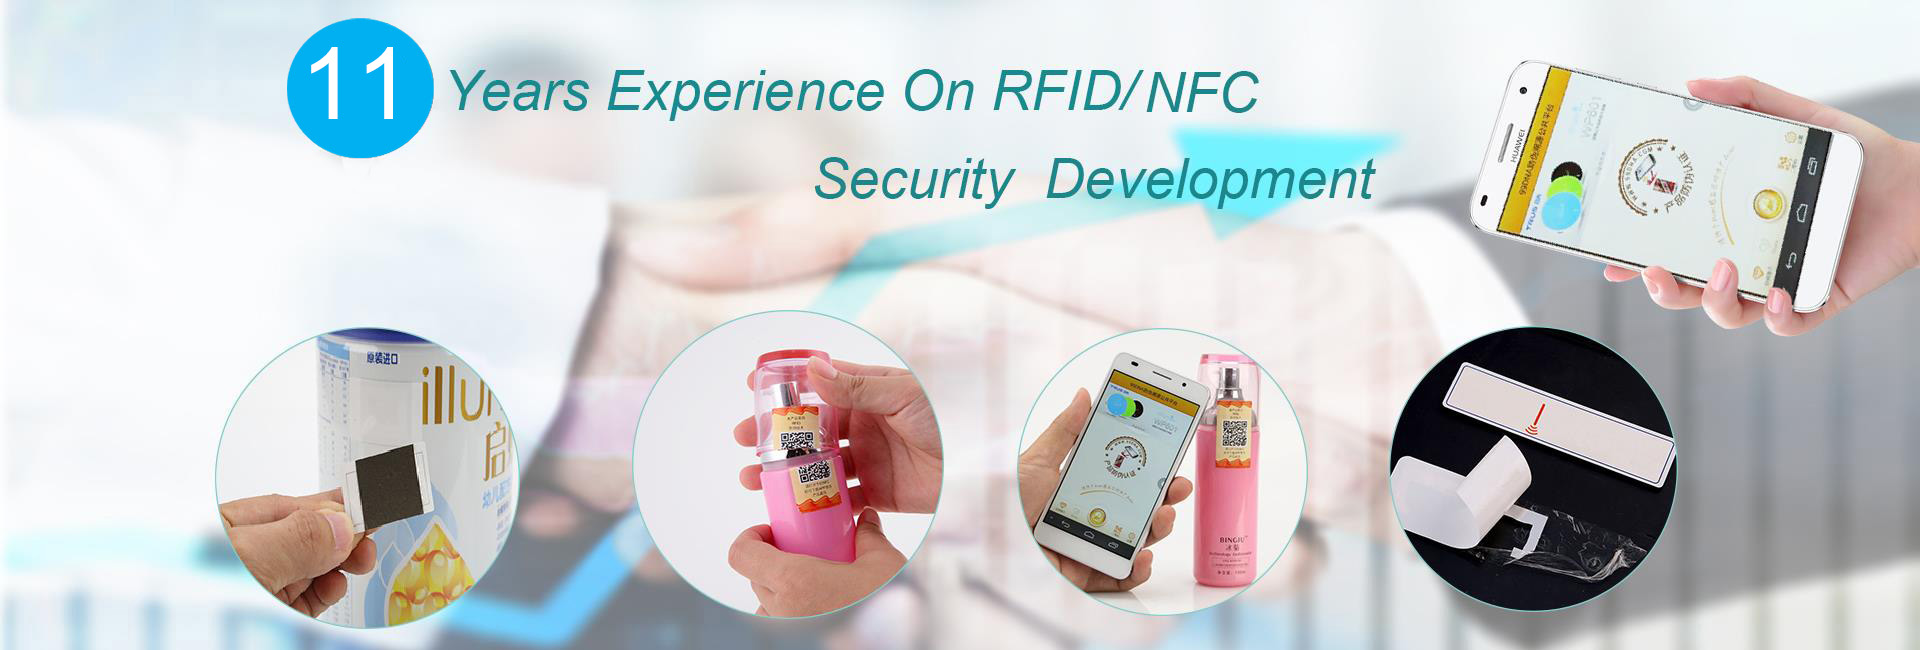  NFC Tab Phone - Brand Protection